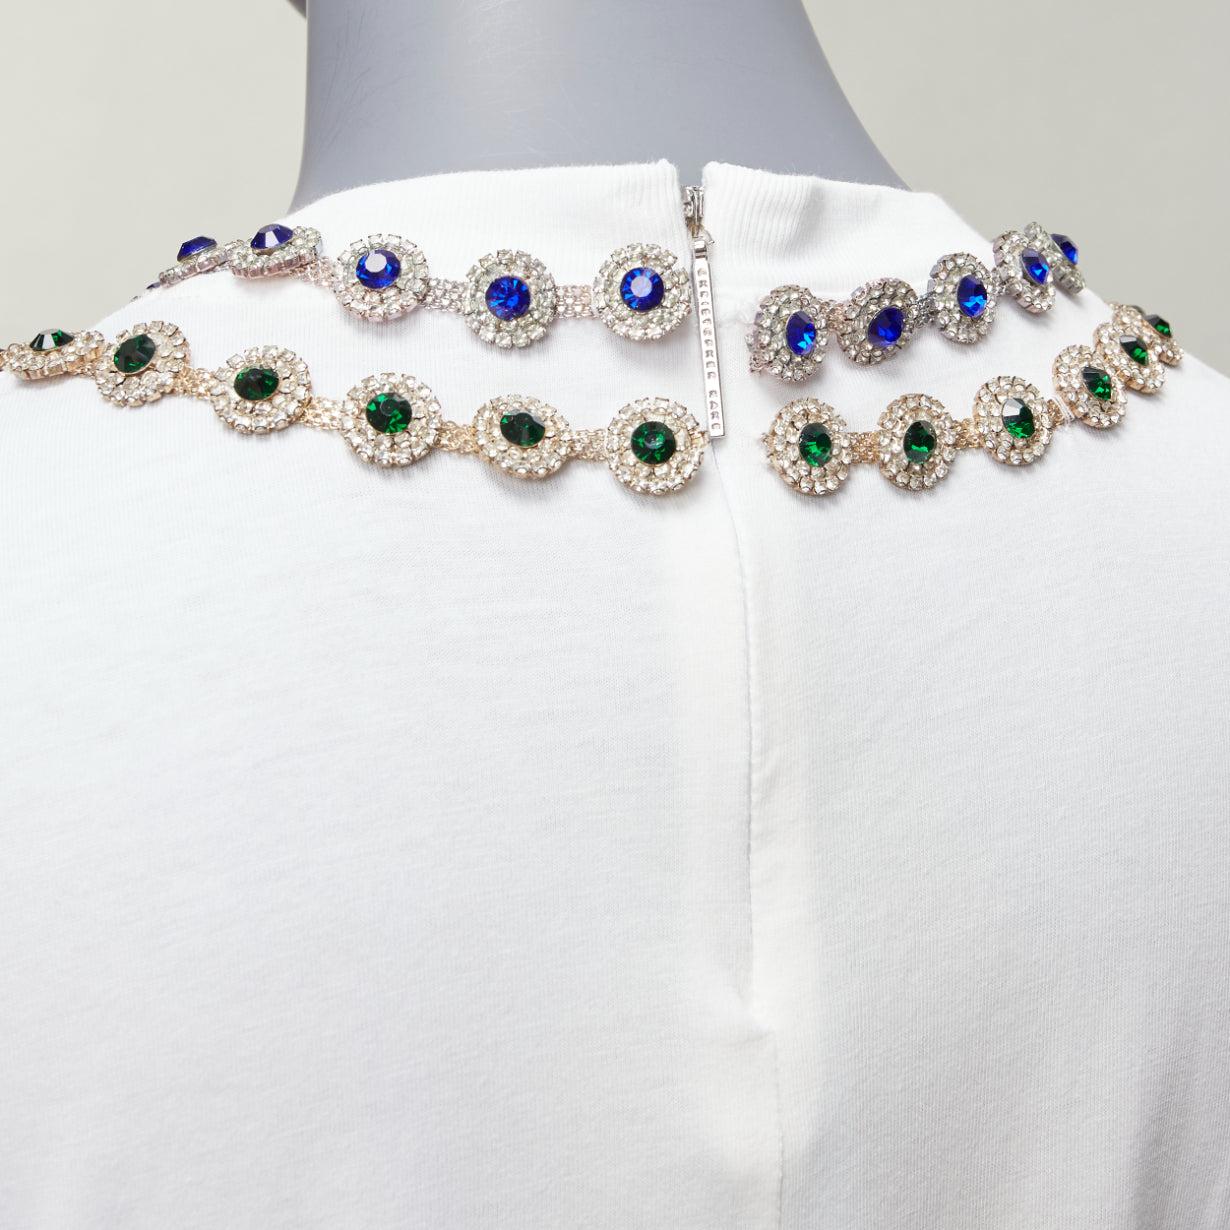 CHRISTOPHER KANE white cotton mixed rhinestone tromp loeil necklace white tshirt For Sale 4